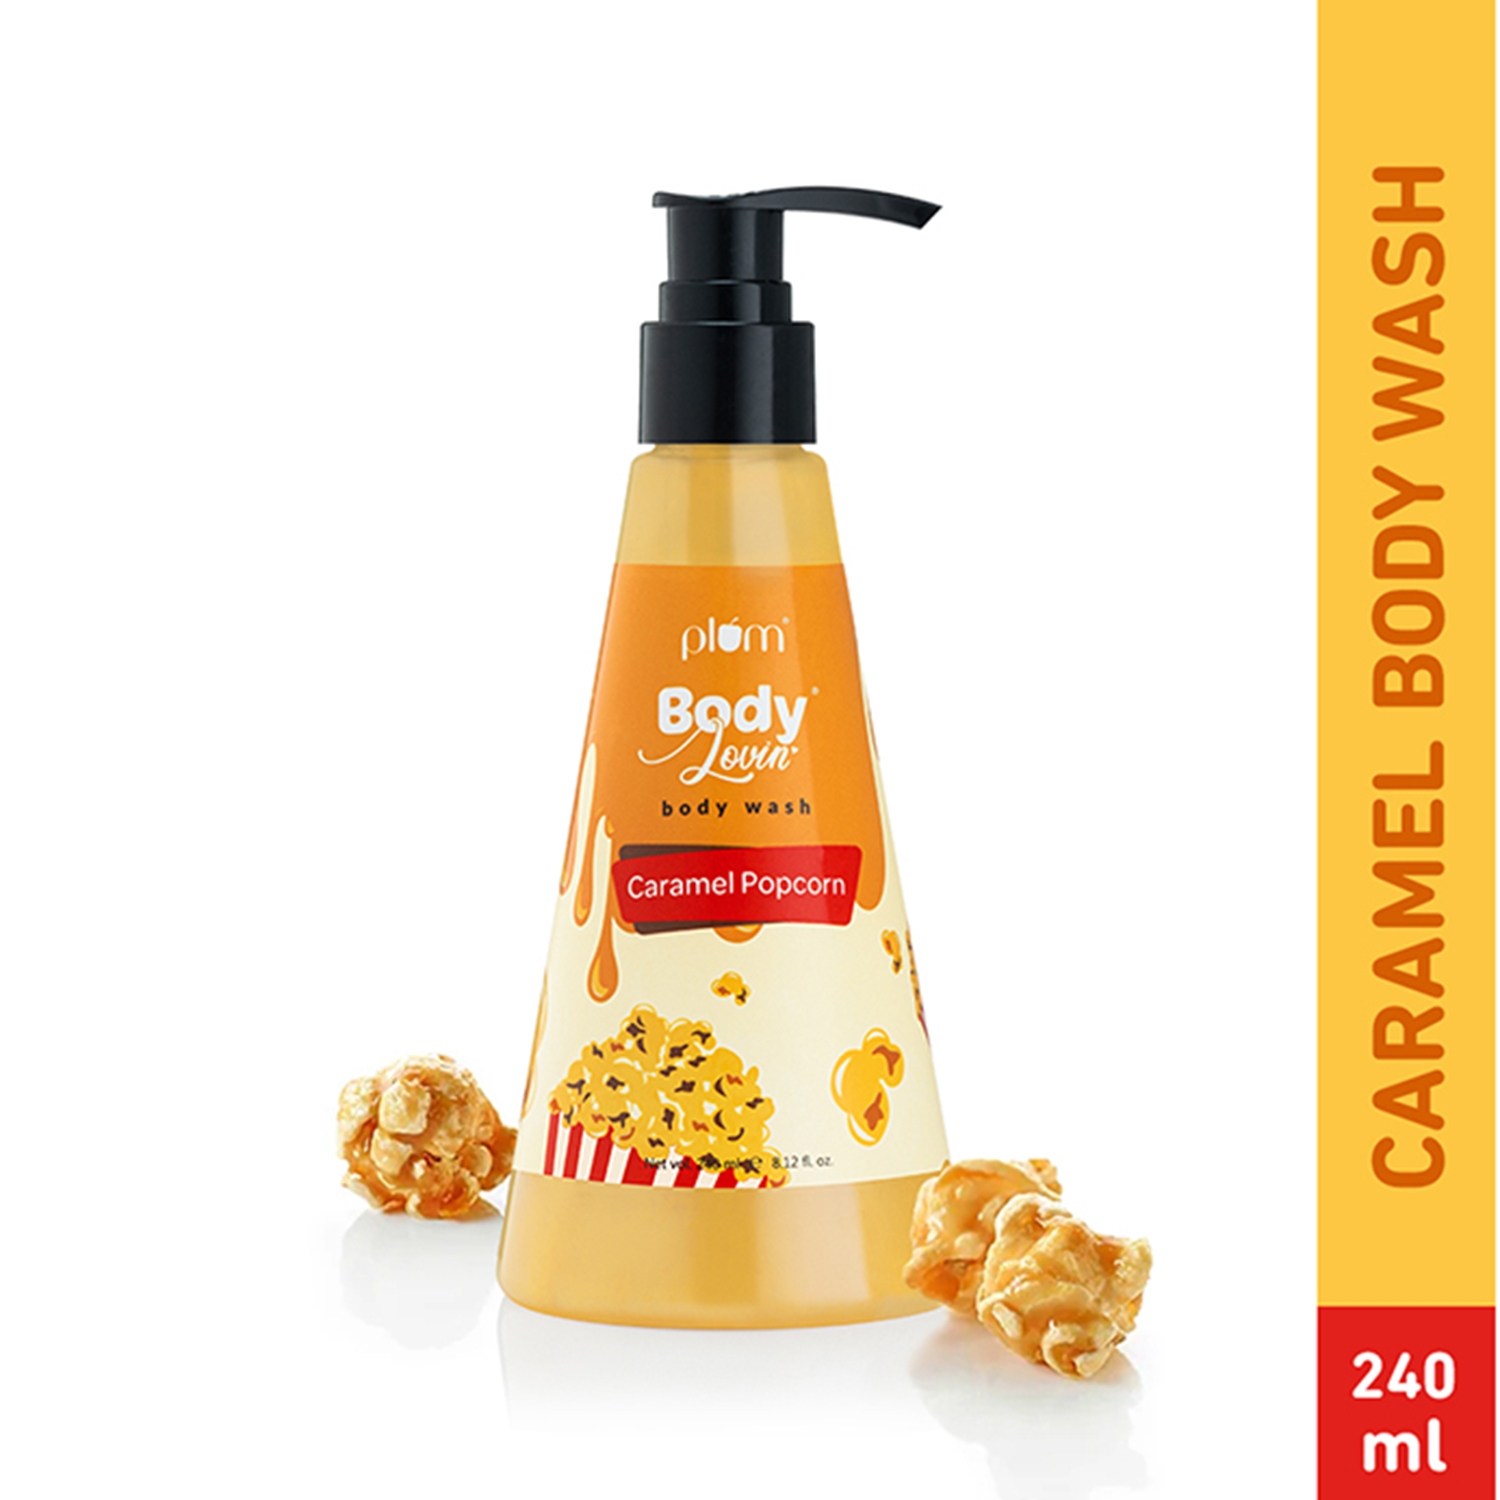 Plum | Plum Bodylovin Caramel Popcorn Body Wash (240ml)